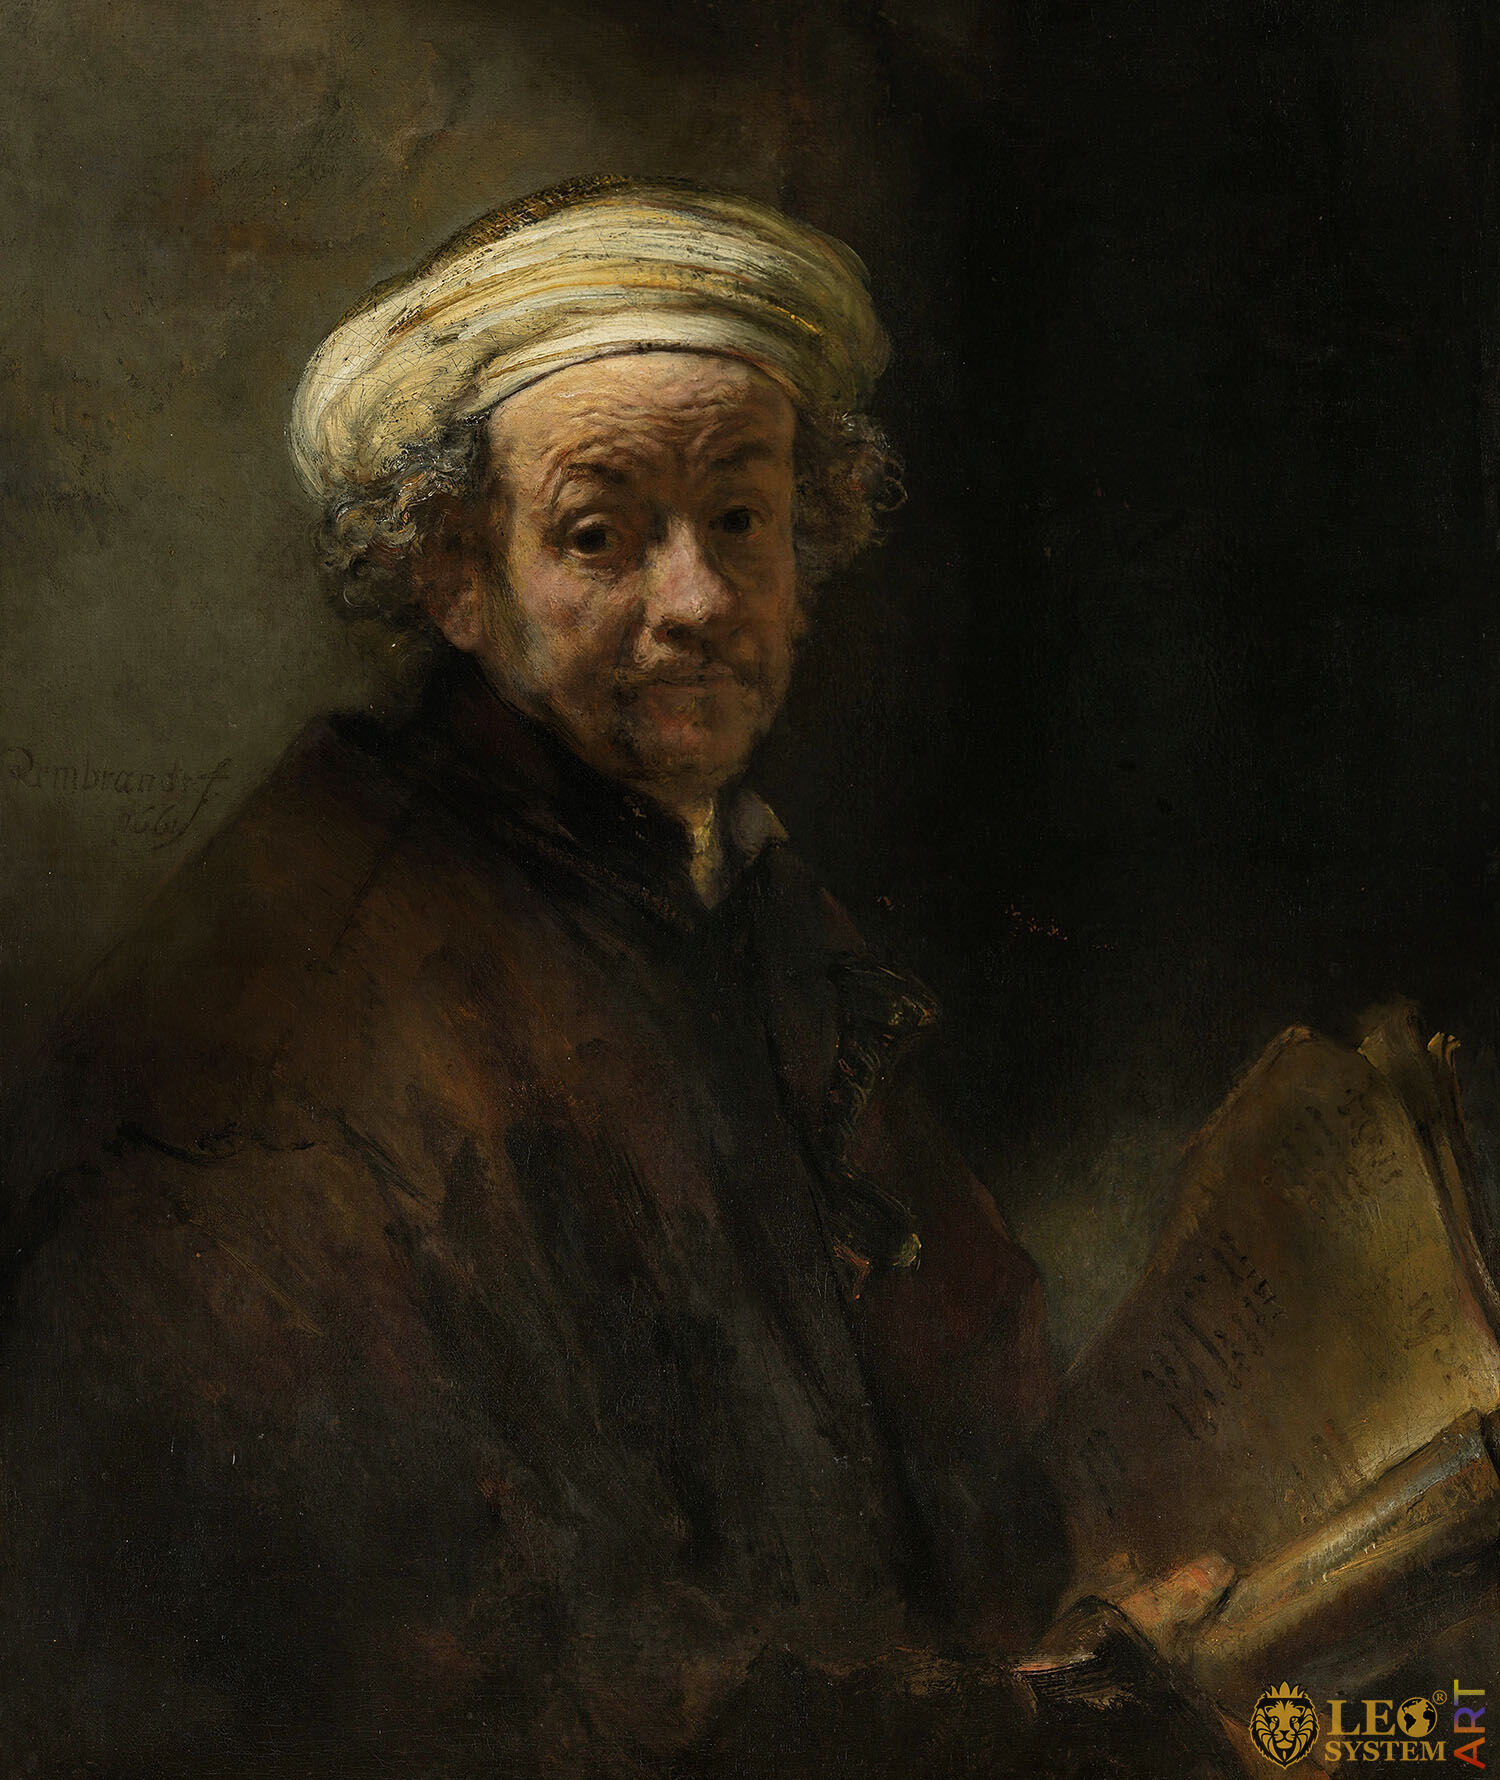 Self-Portrait as the Apostle Paul, Painter: Rembrandt van Rijn, 1661, Amsterdam, Netherlands, Original painting